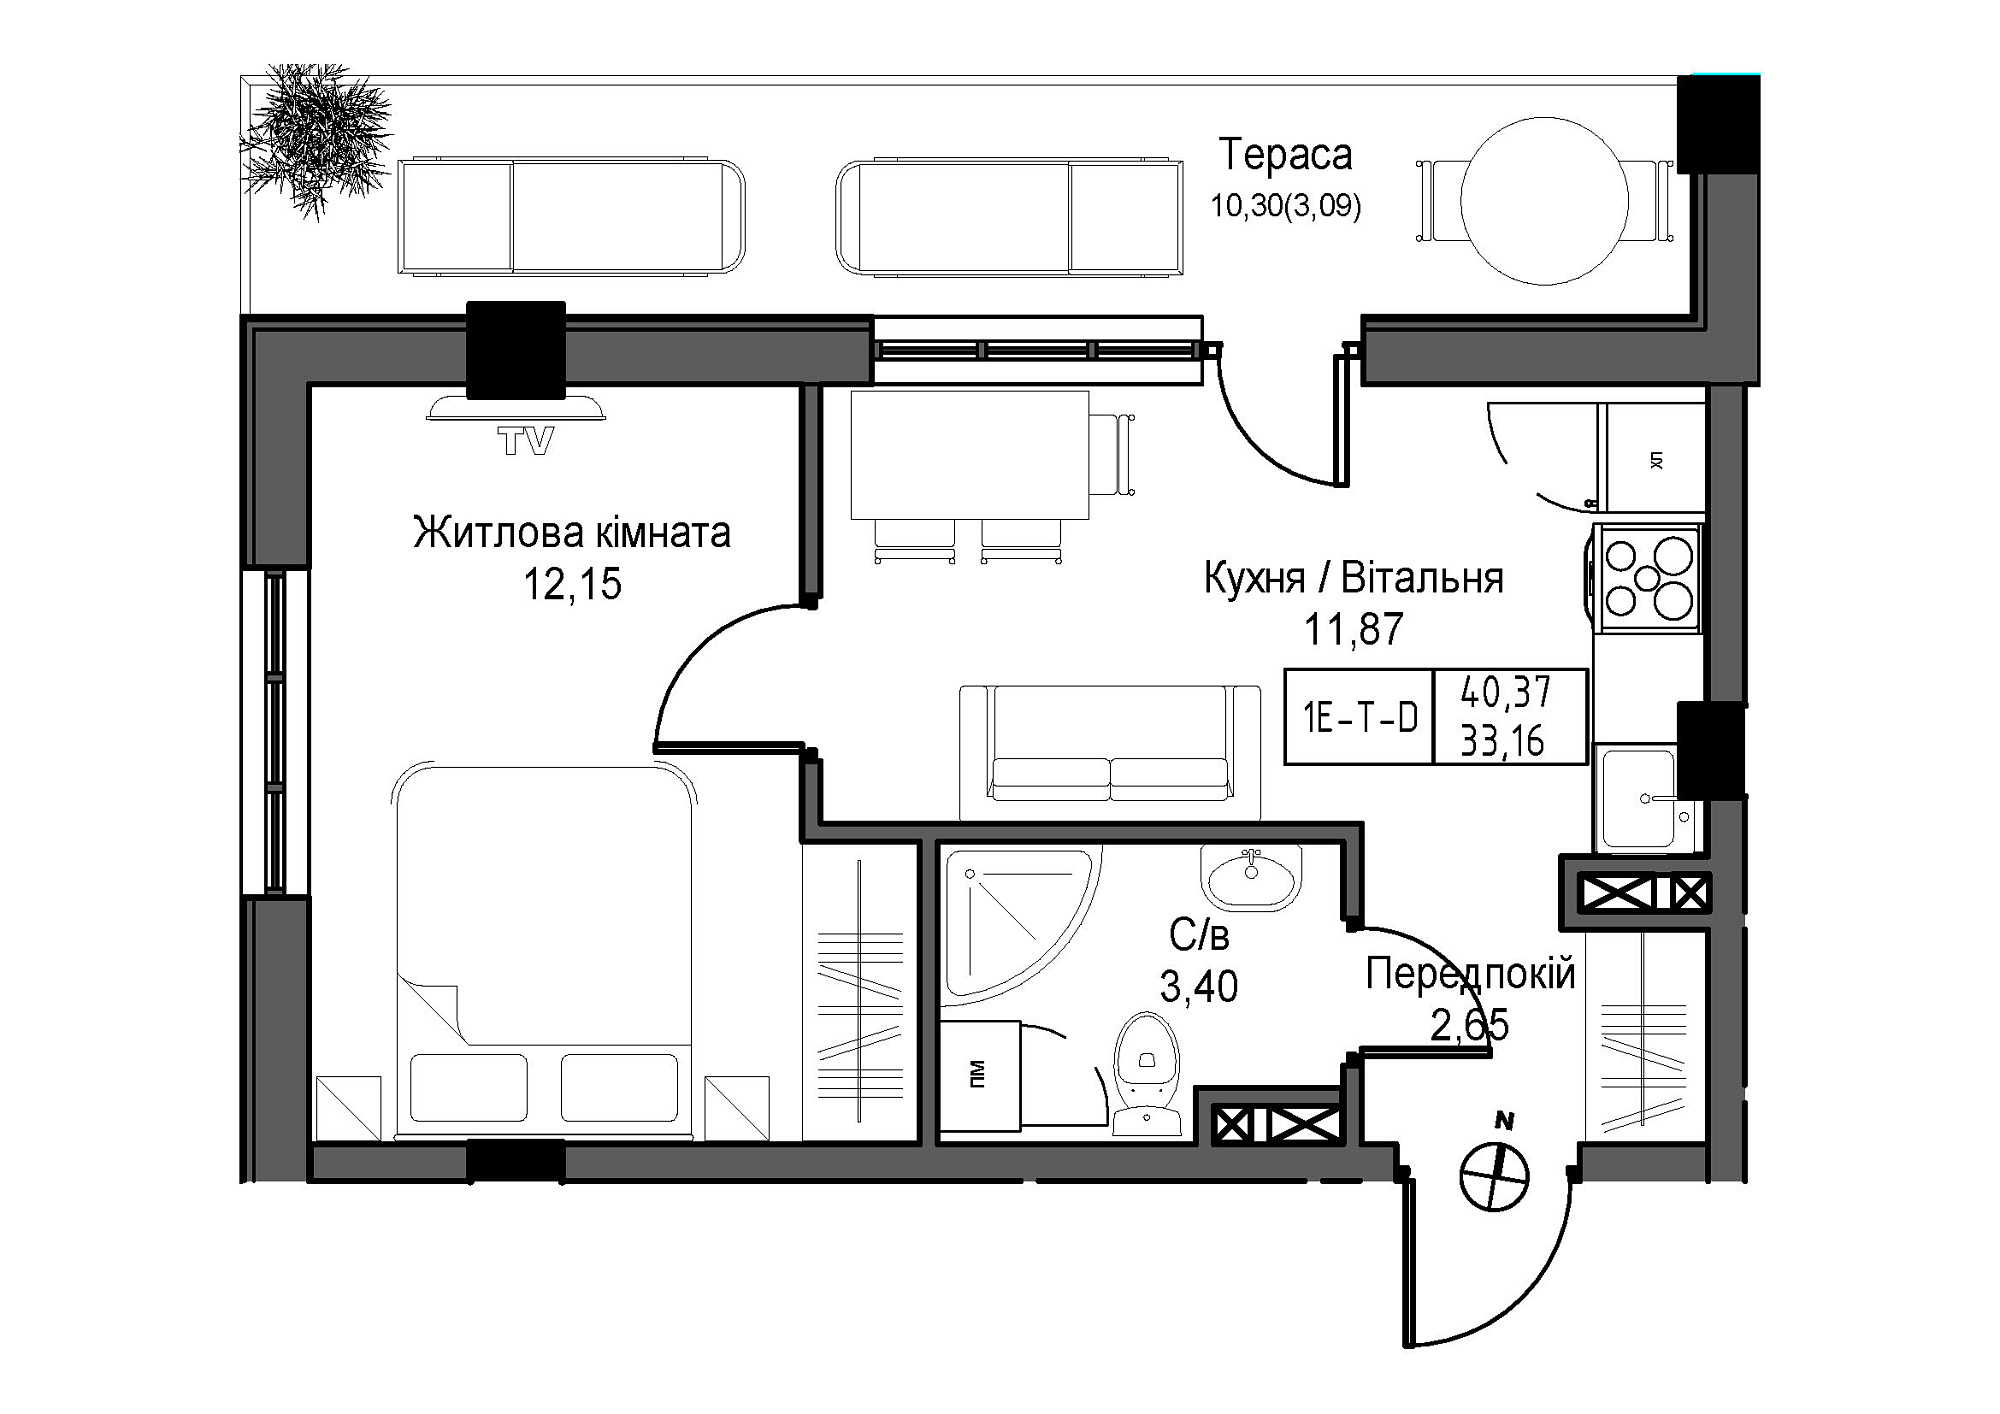 Планування 1-к квартира площею 33.16м2, UM-007-06/0002.